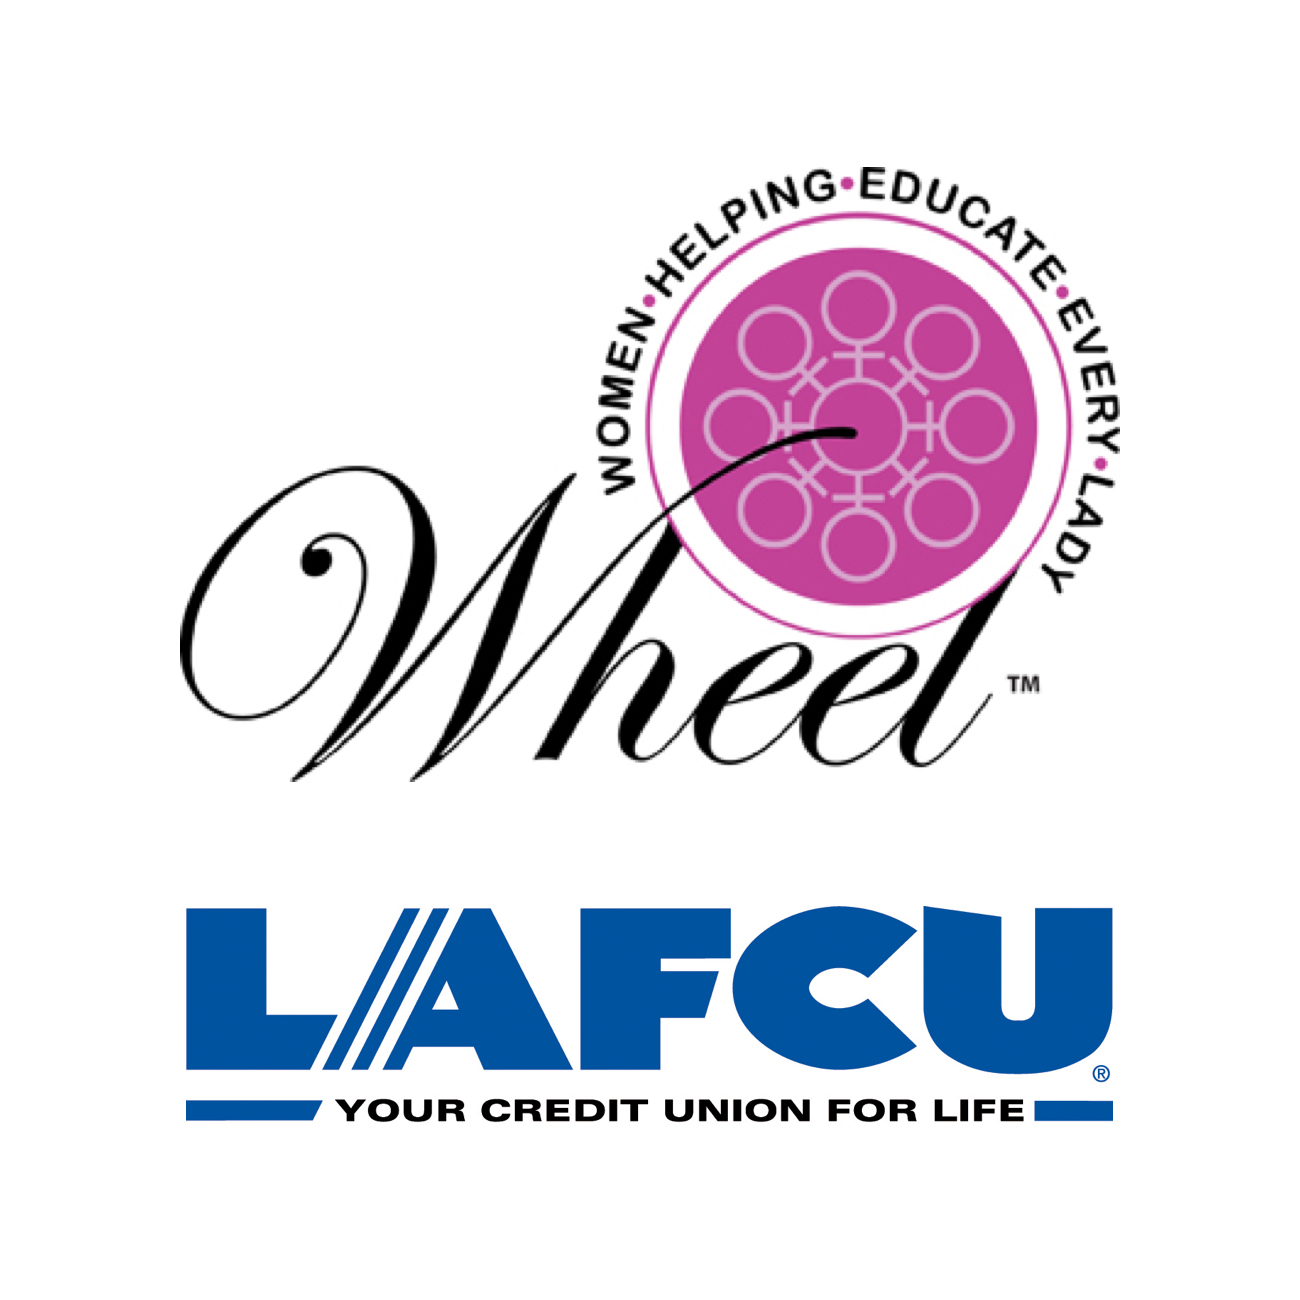 LAFCU-Wheel logos